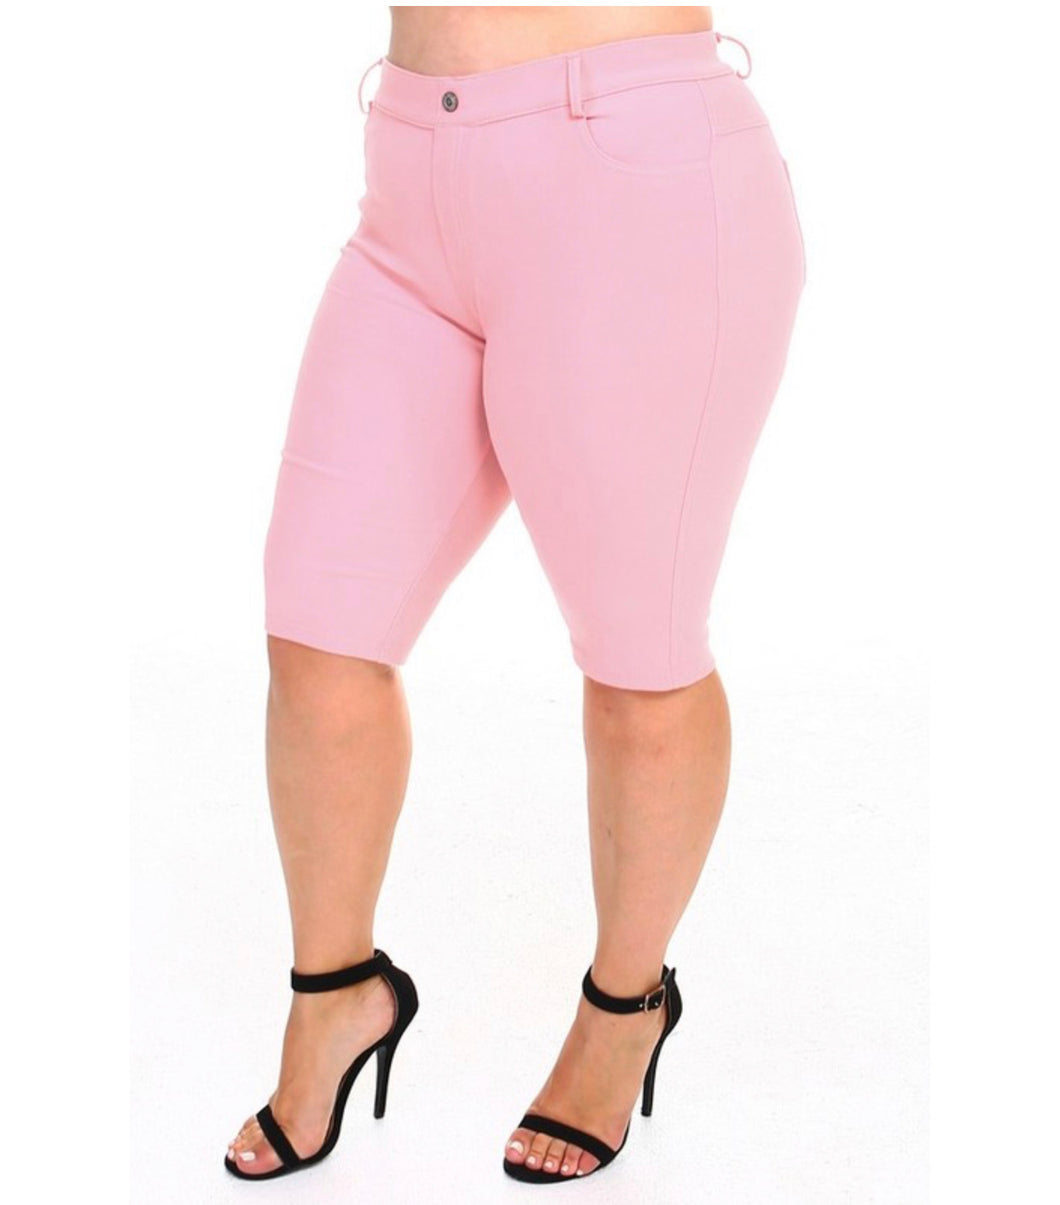 Pink Bermuda shorts